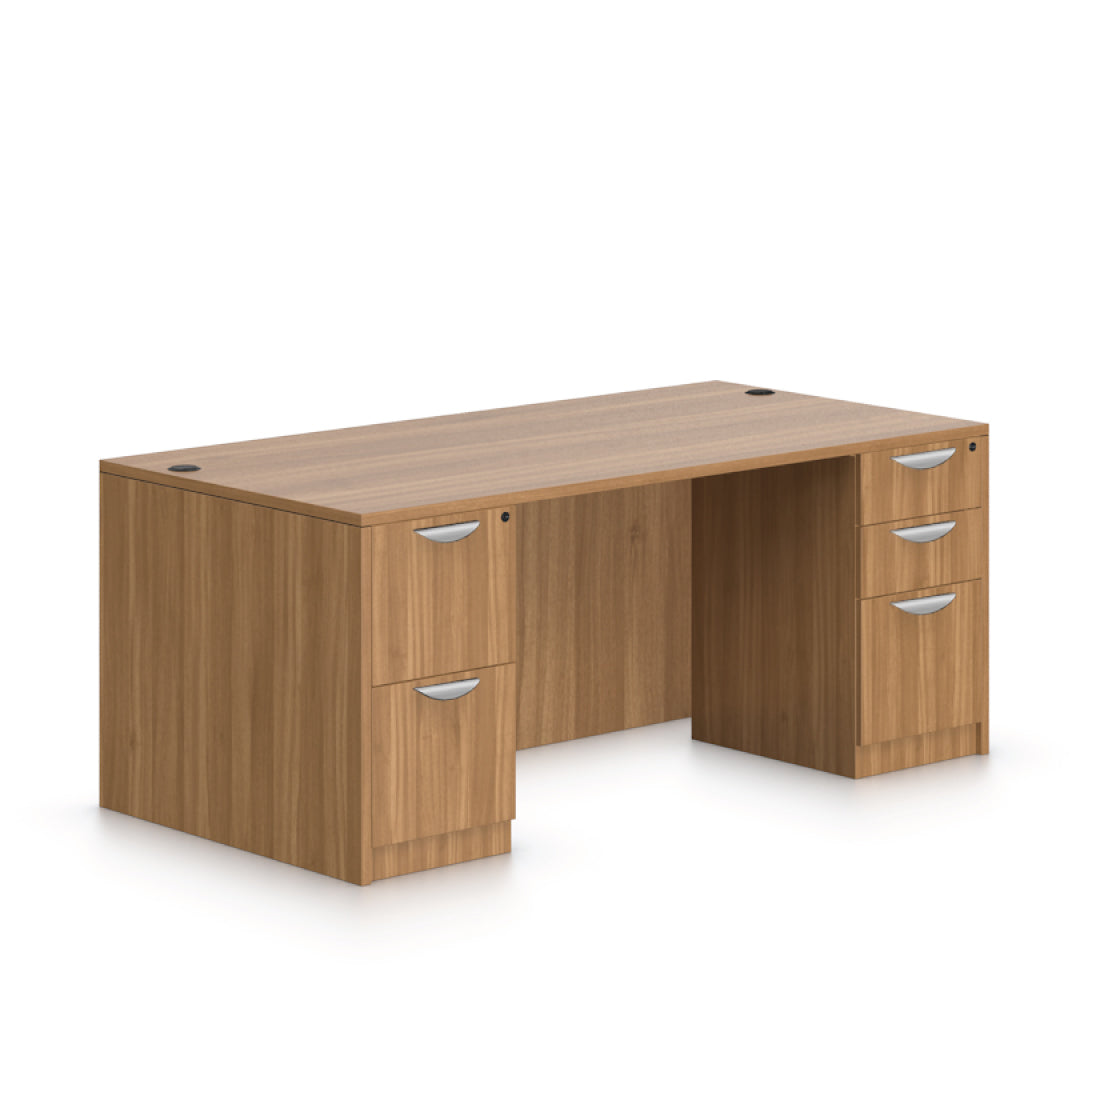 71"x36" Rectangular Desk with B/B/F pedestal and F/F pedestal - Kainosbuy.com